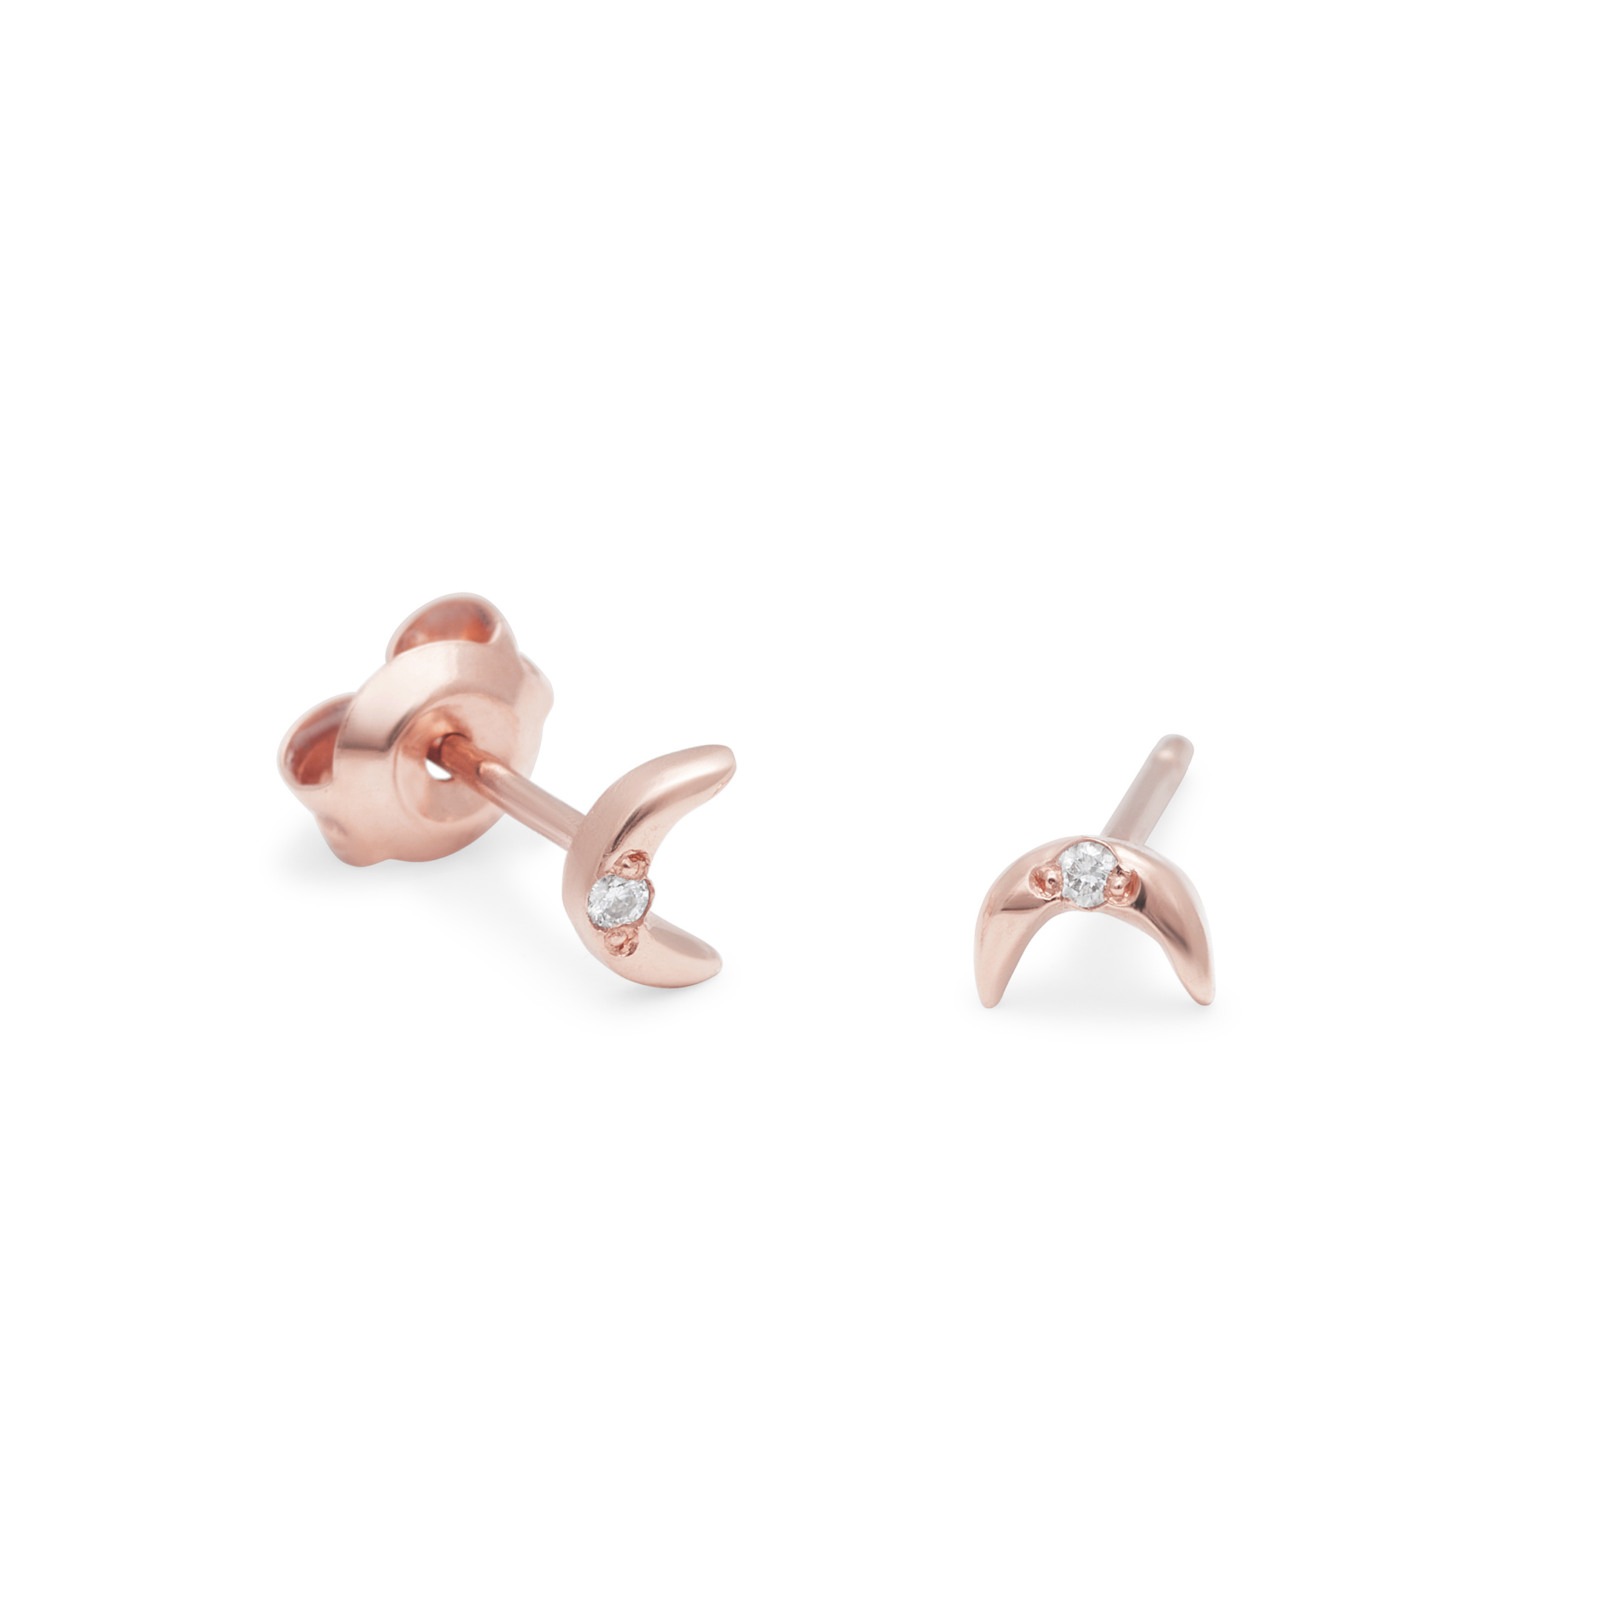 teeny tiny moon stud earrings 14k pink gold